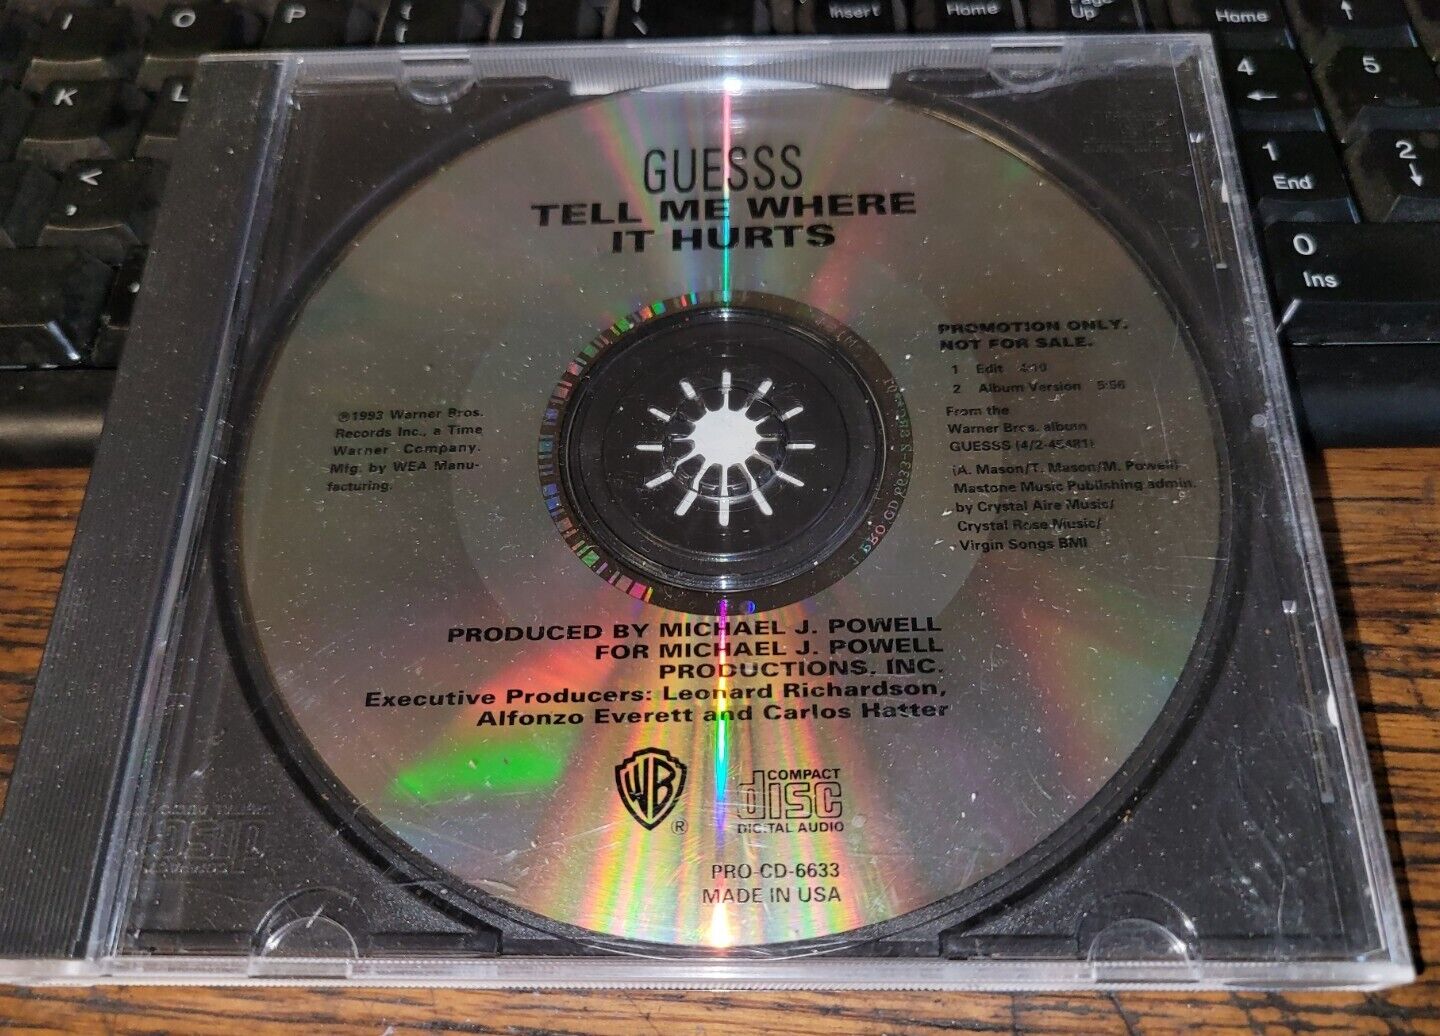 GUESS - TELL ME WHERE IT HURTS   RARE 2TRK R&B PROMO SINGLE 1990 CD